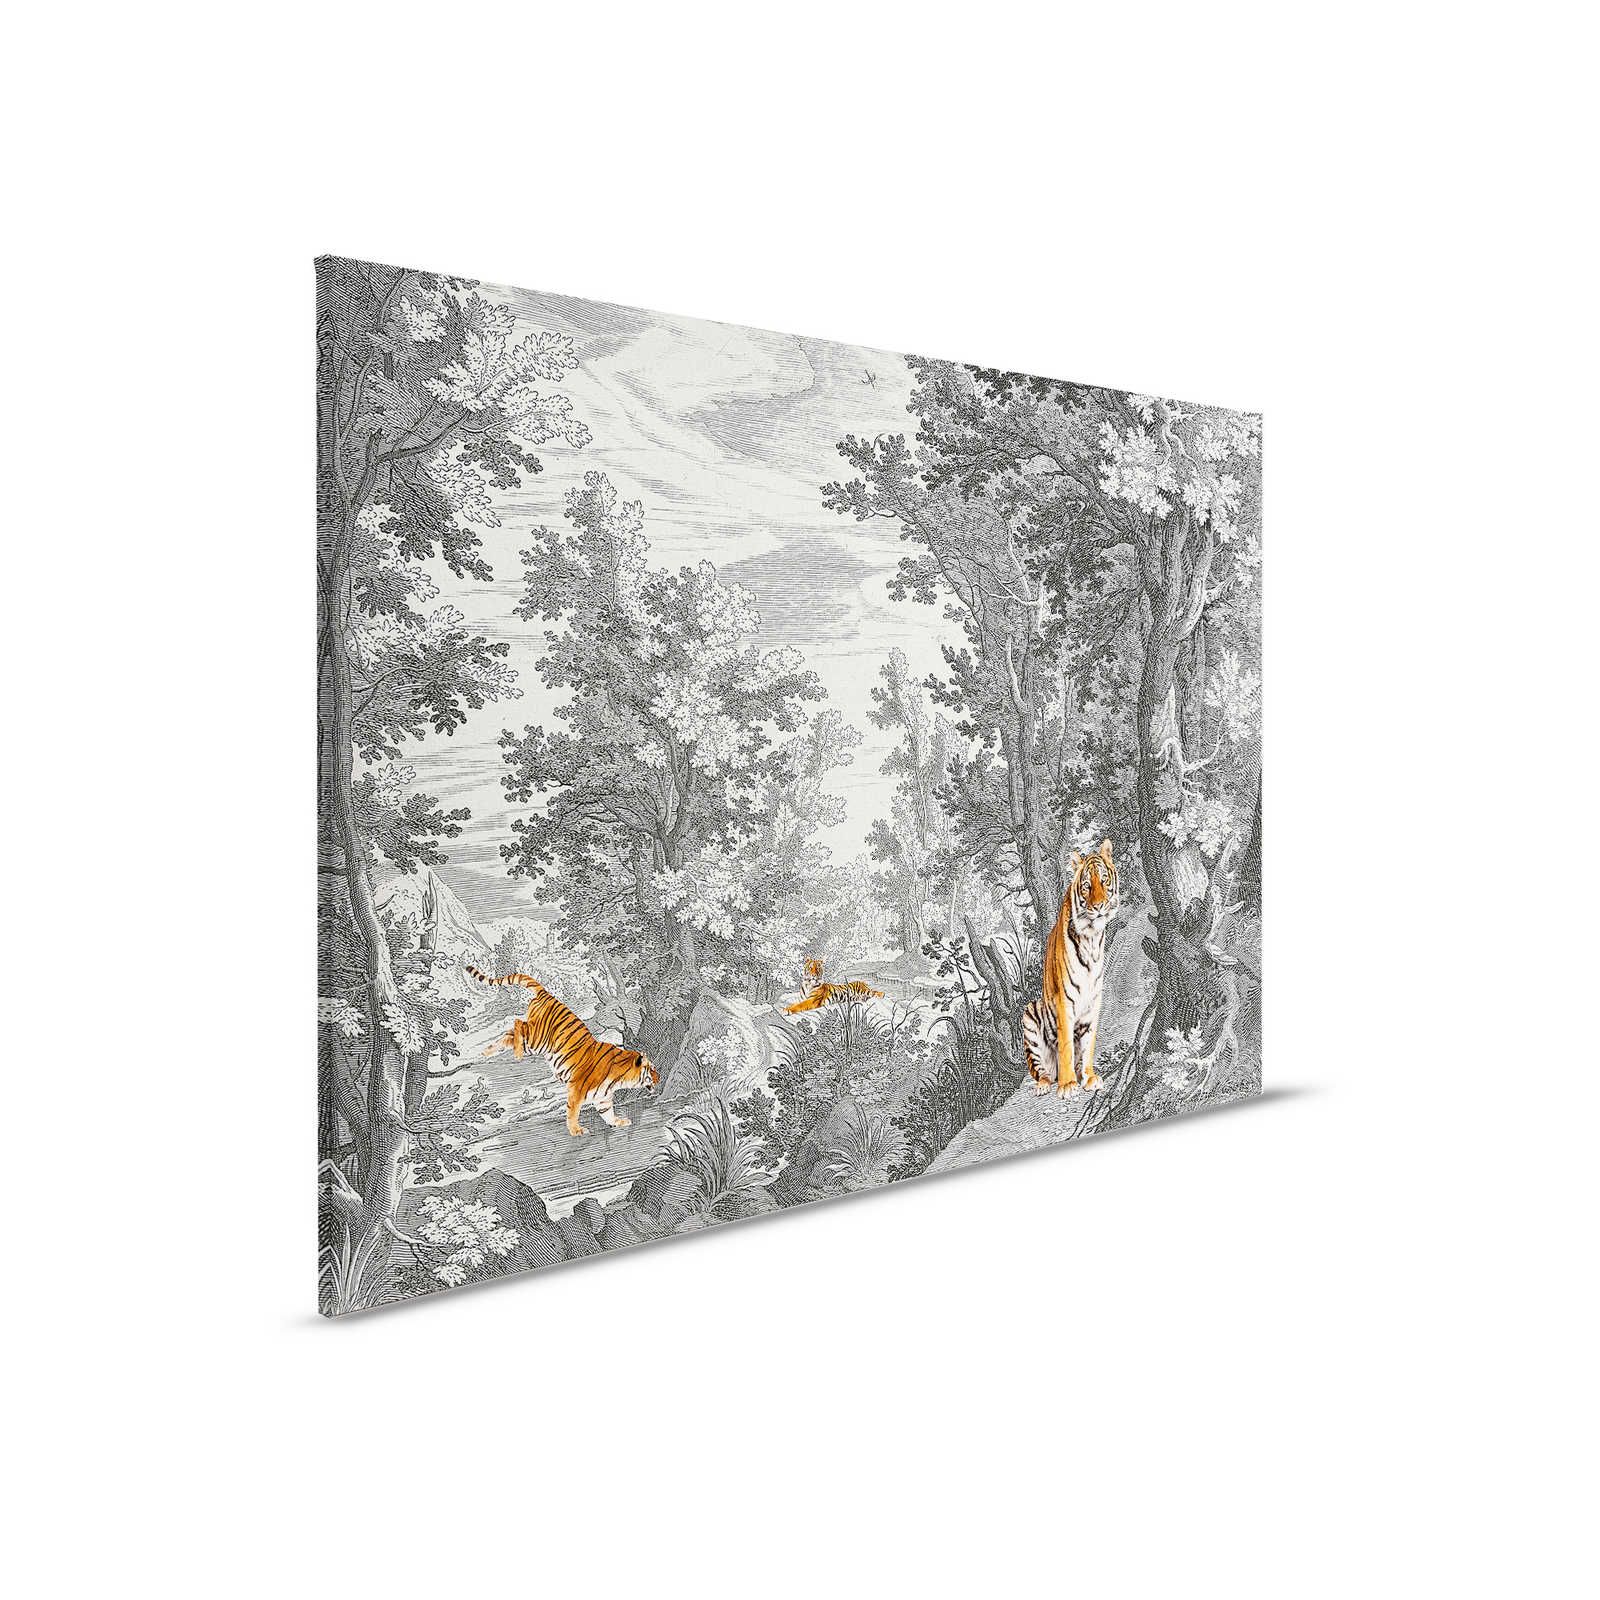 Fancy Forest 2 - Cuadro en lienzo Paisaje clásico con tigre - 0,90 m x 0,60 m
